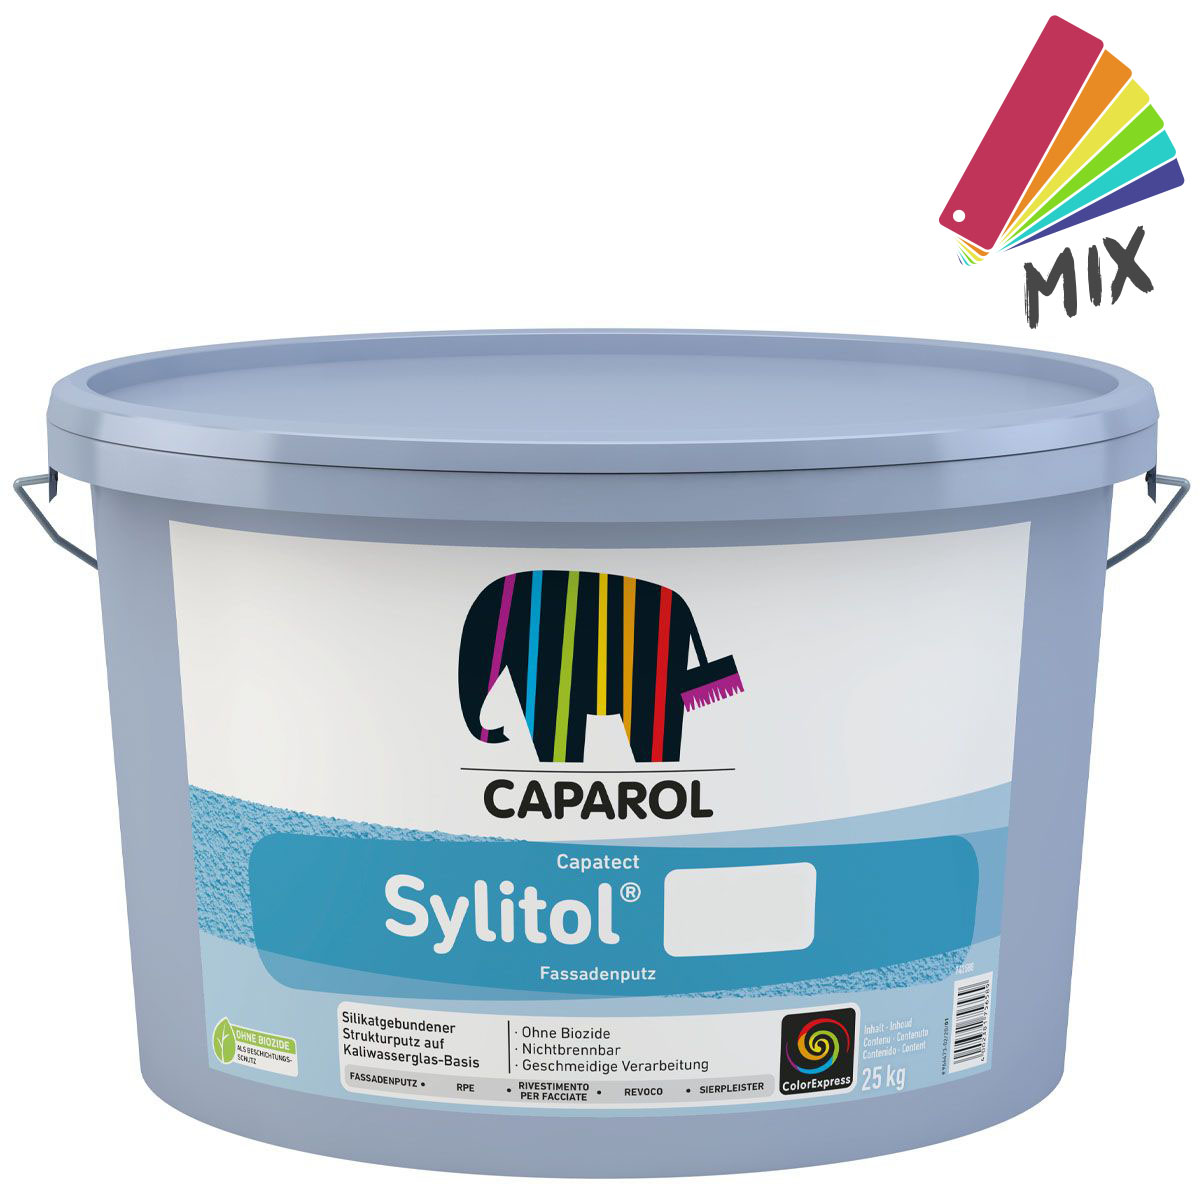 Caparol Capatect Sylitol Fassadenputz K15 (1,5mm) 25kg, MIX PG S